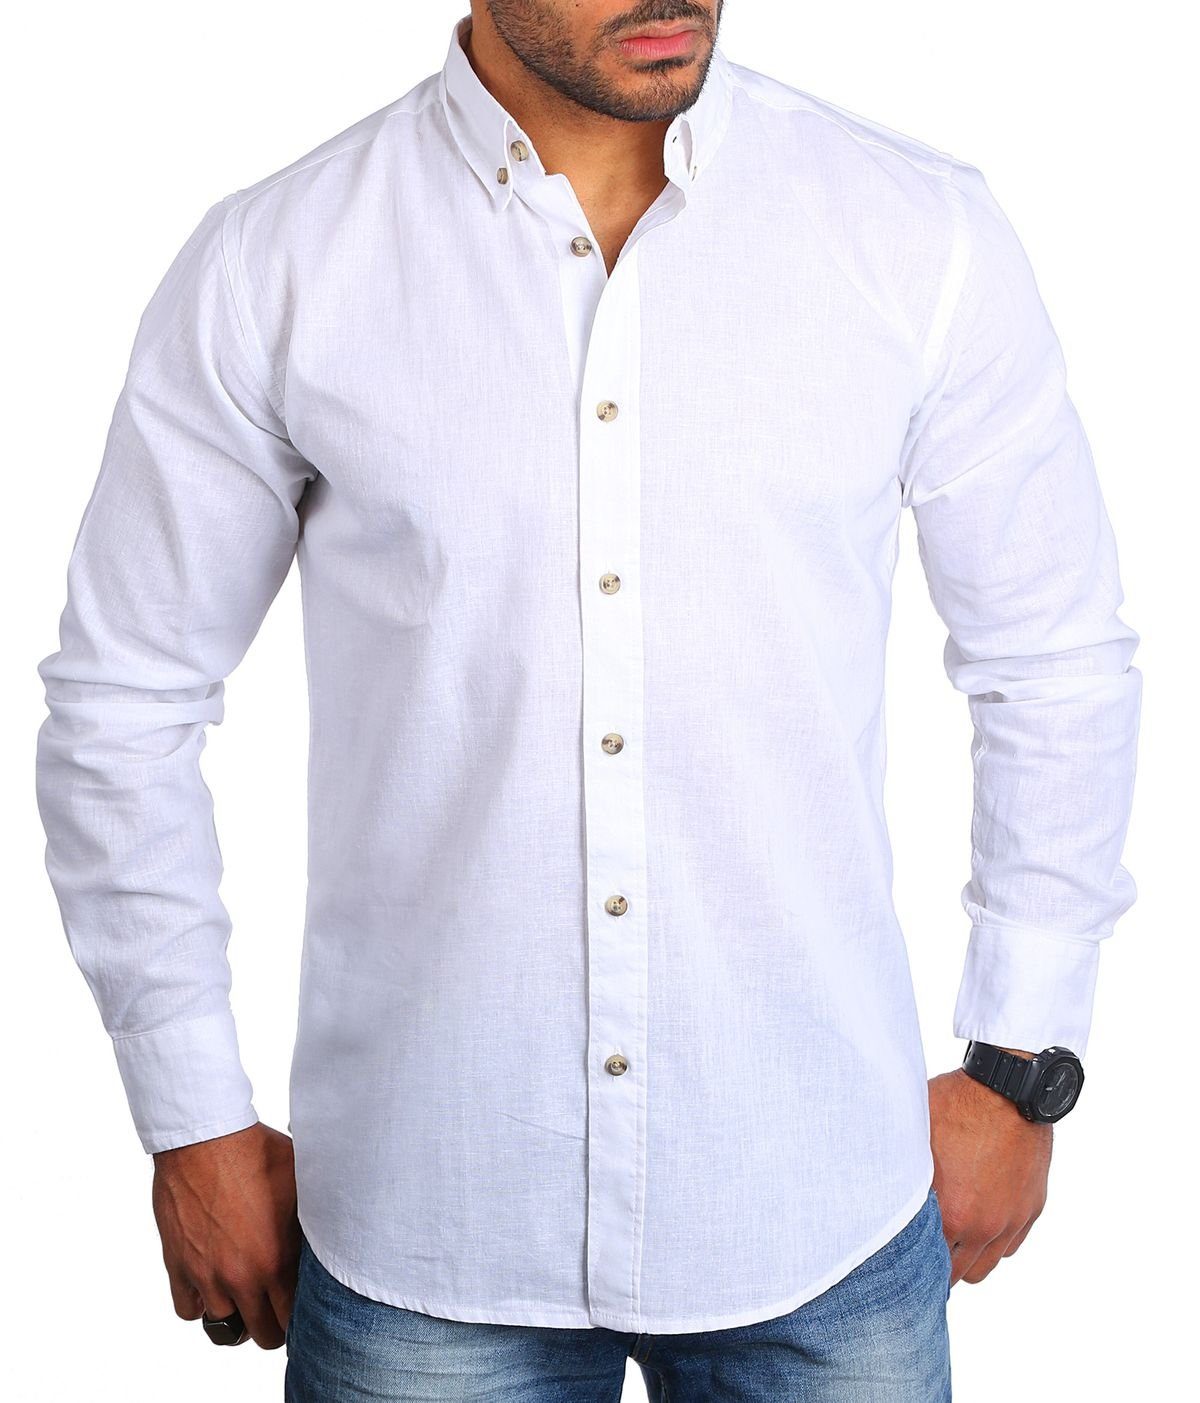 CARISMA Langarmhemd Herren Leinen Baumwoll Button-Down-Kragen Hemd Langarm Uni Regular 8529 Weiß Mix Casual